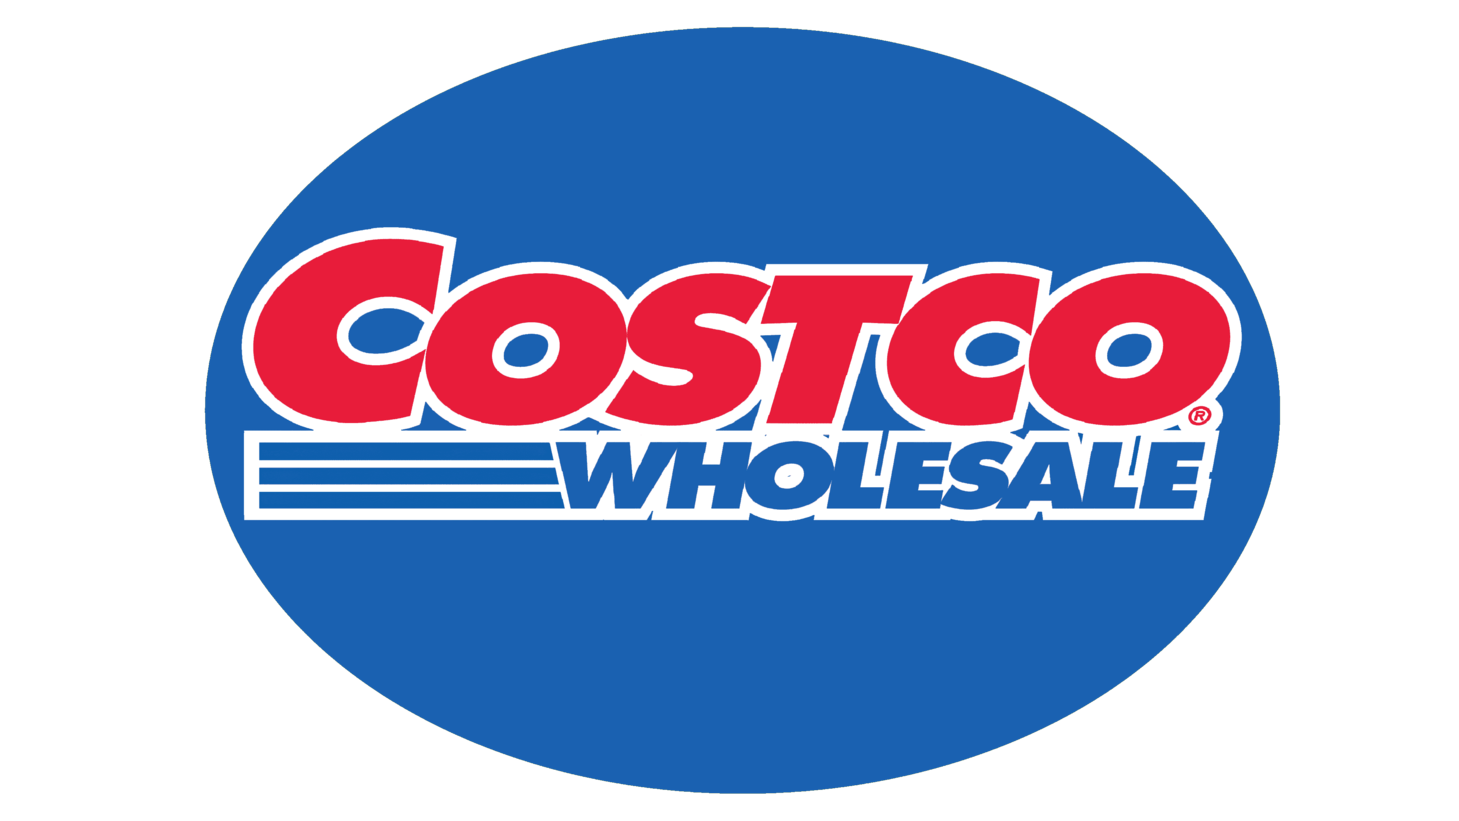 Costco wholesale symbol